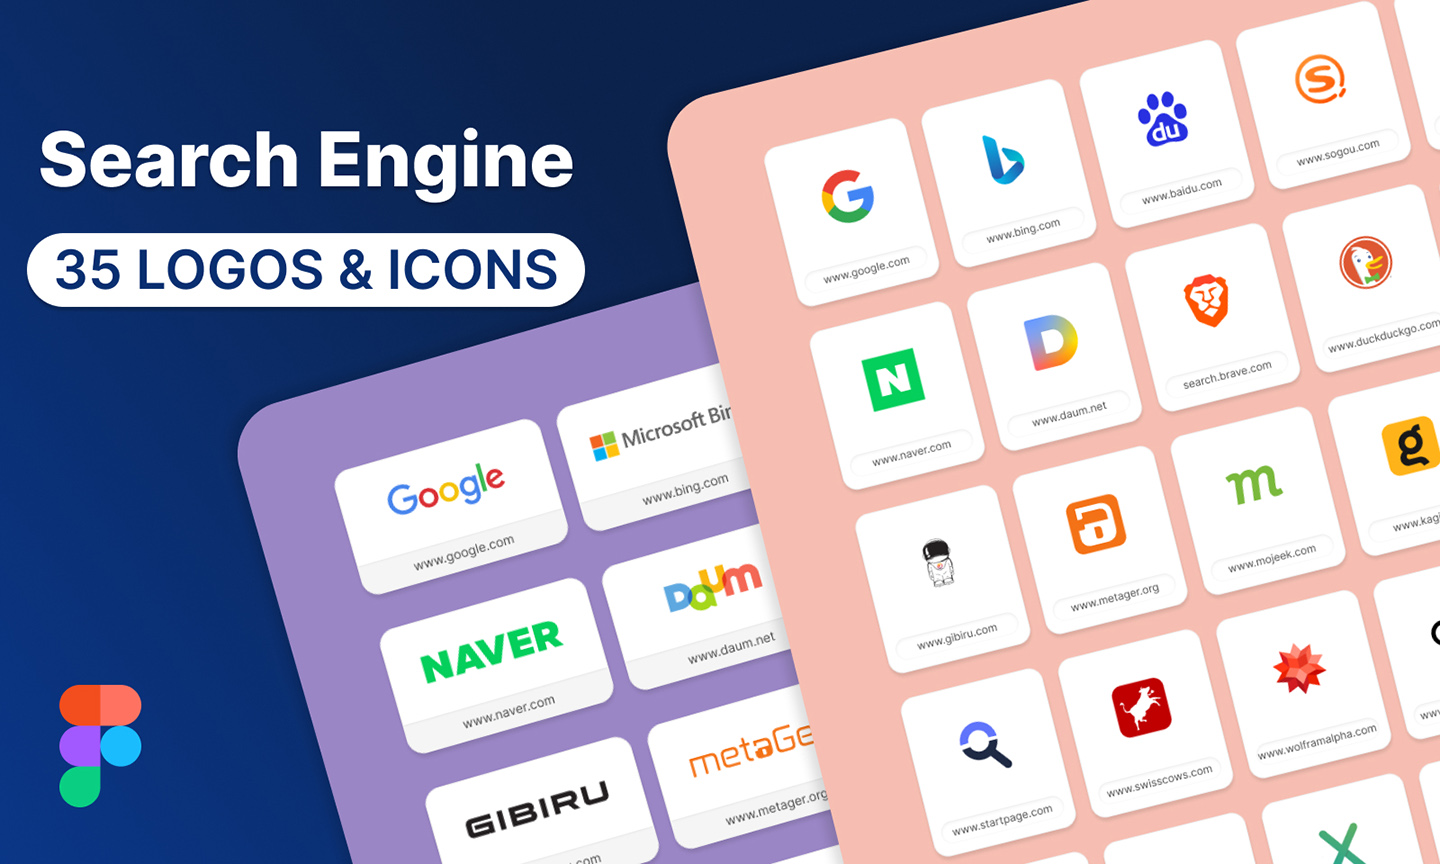 Search Engine logo/icon